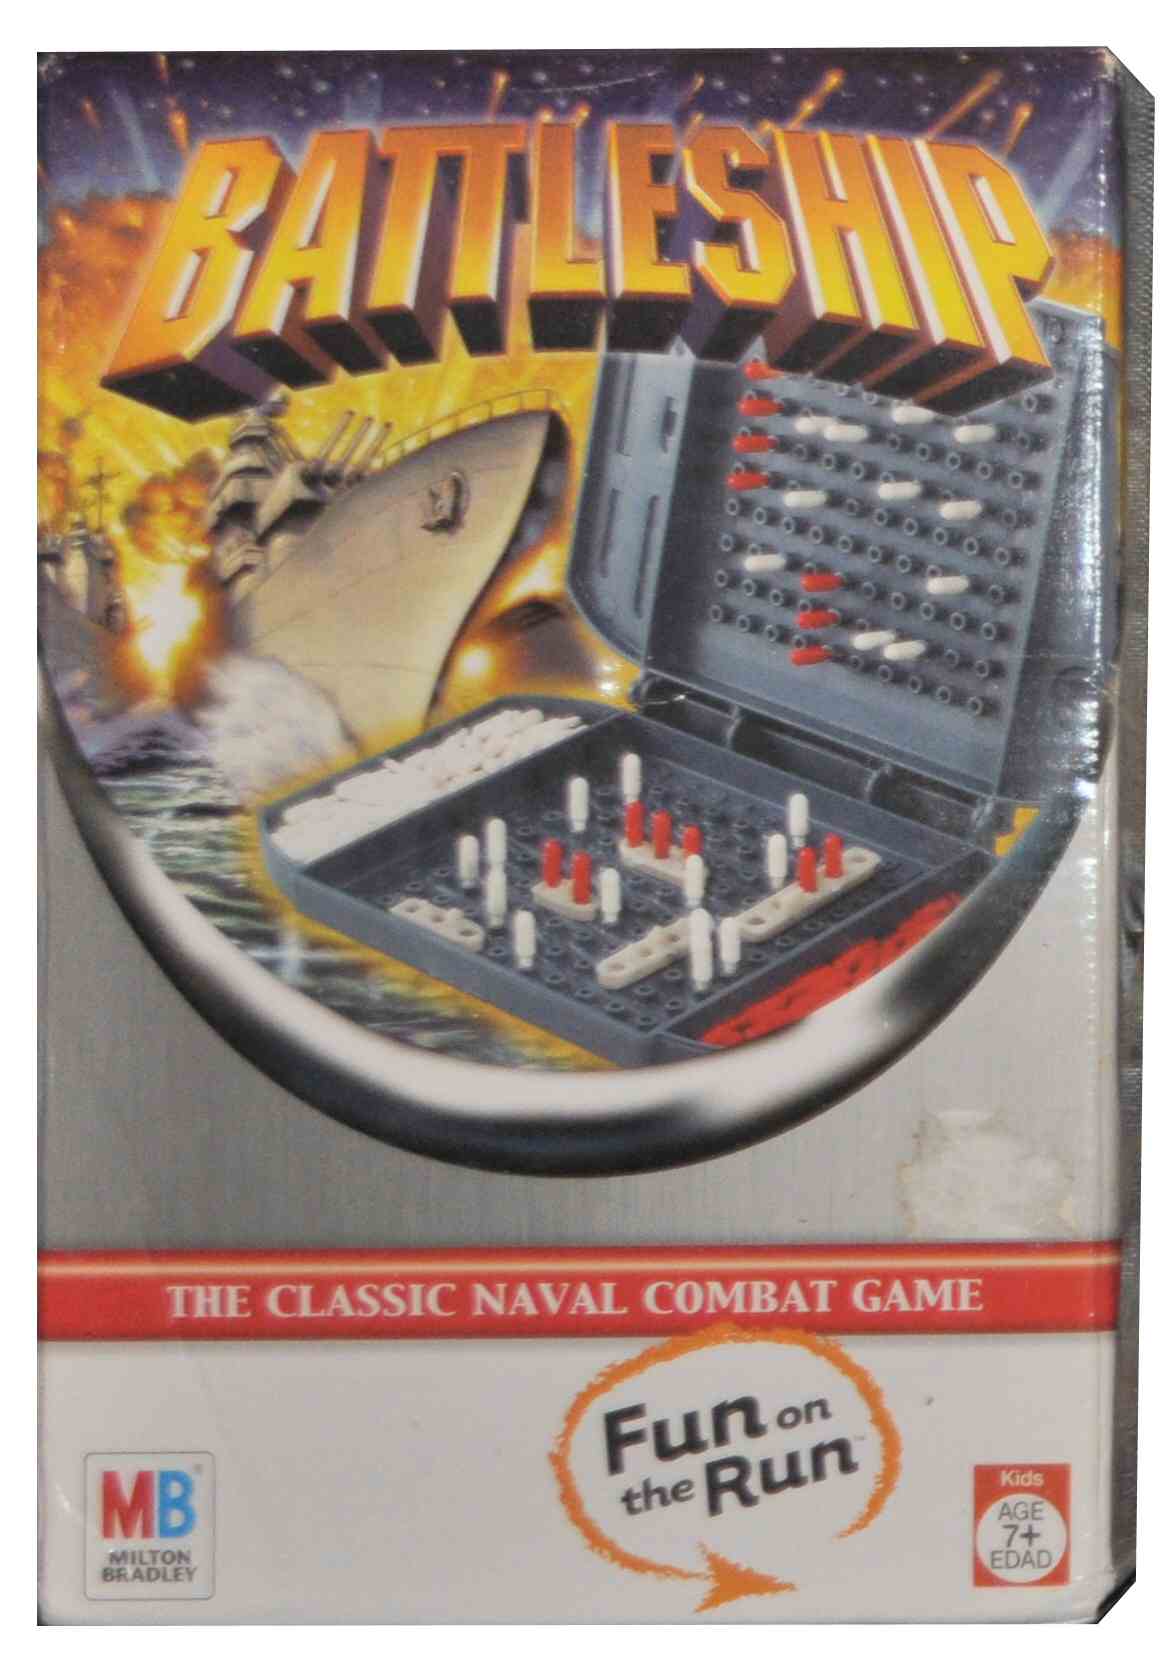 play battleship online with a friend